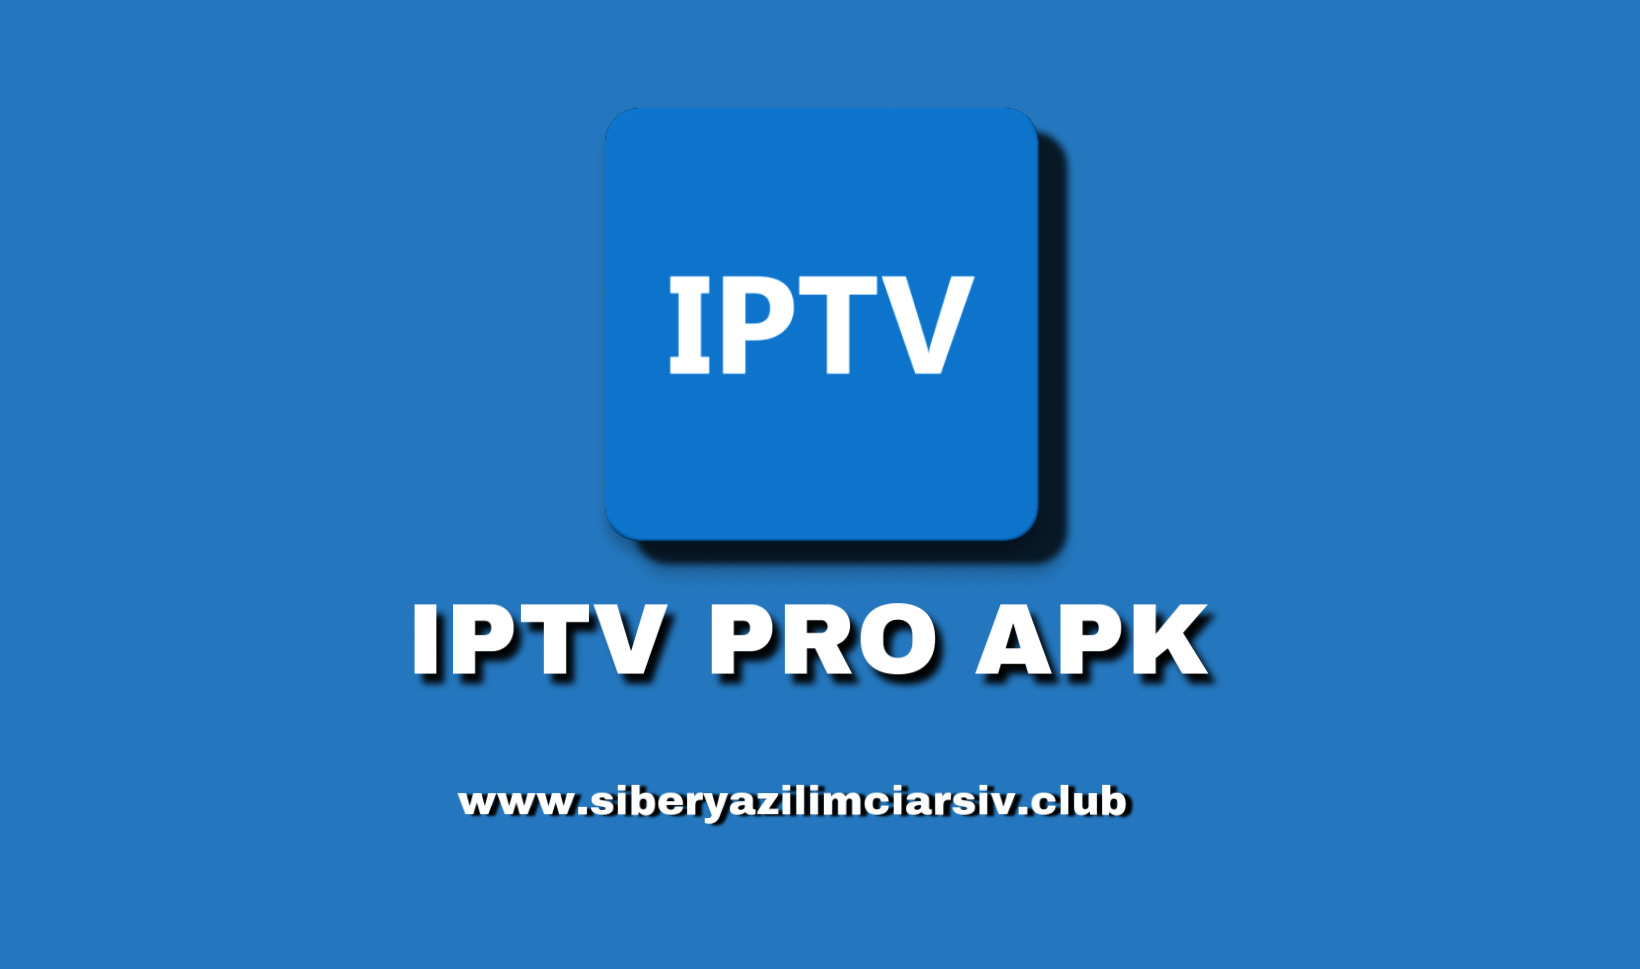 Iptv pro бесплатная. IPTV Pro. IPTV Pro APK. Pro IPTV плагин. Ott Navigator IPTV.